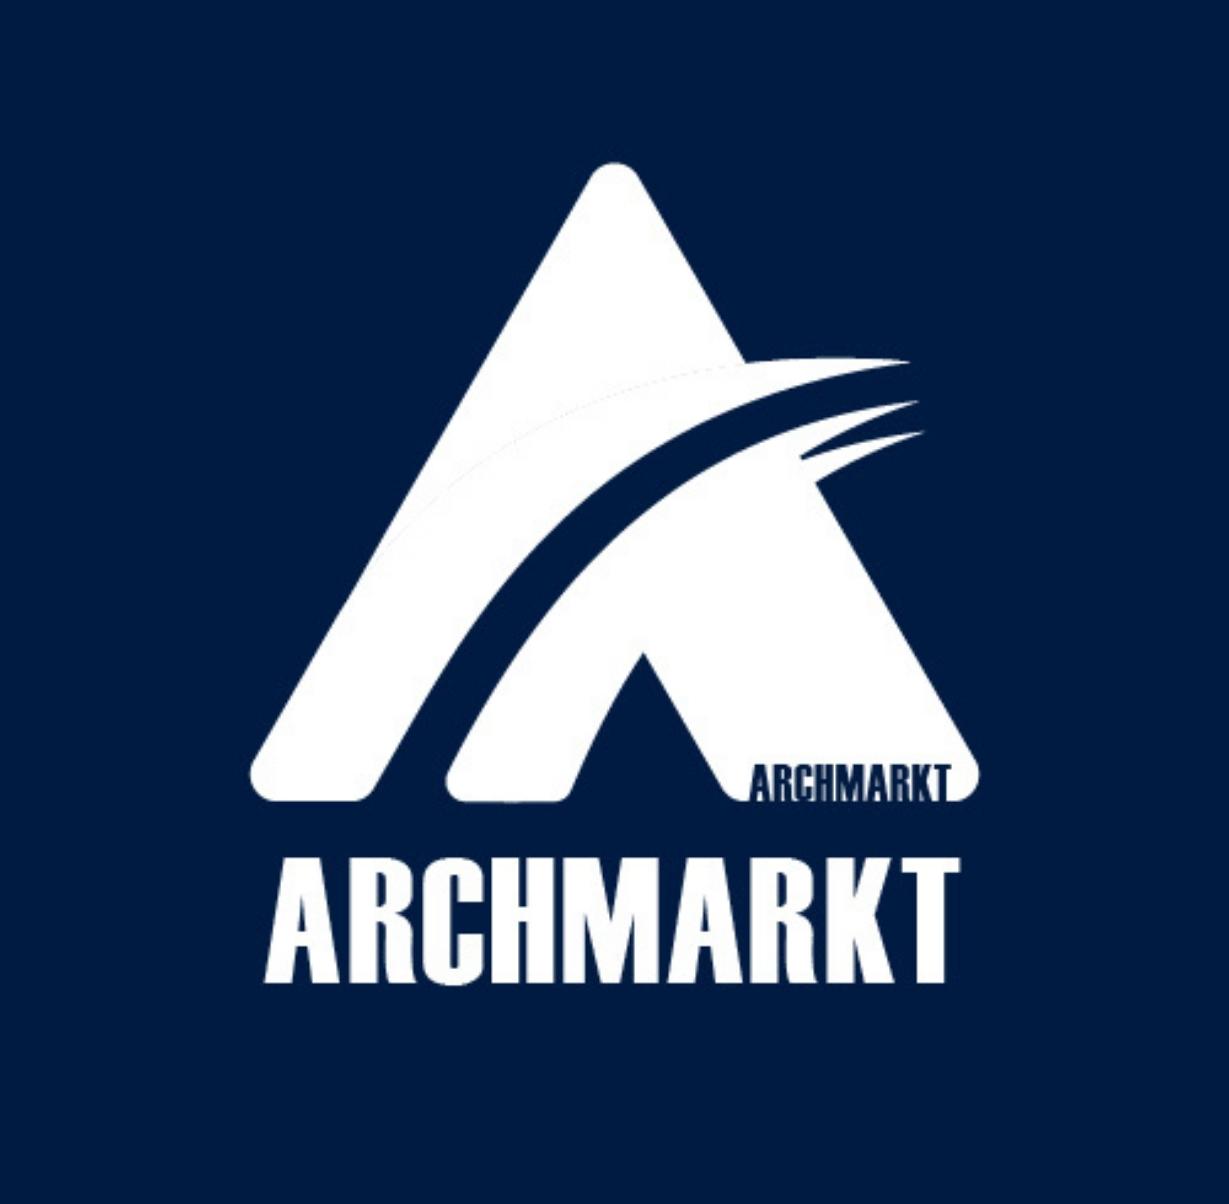 archmarkt bursa logo